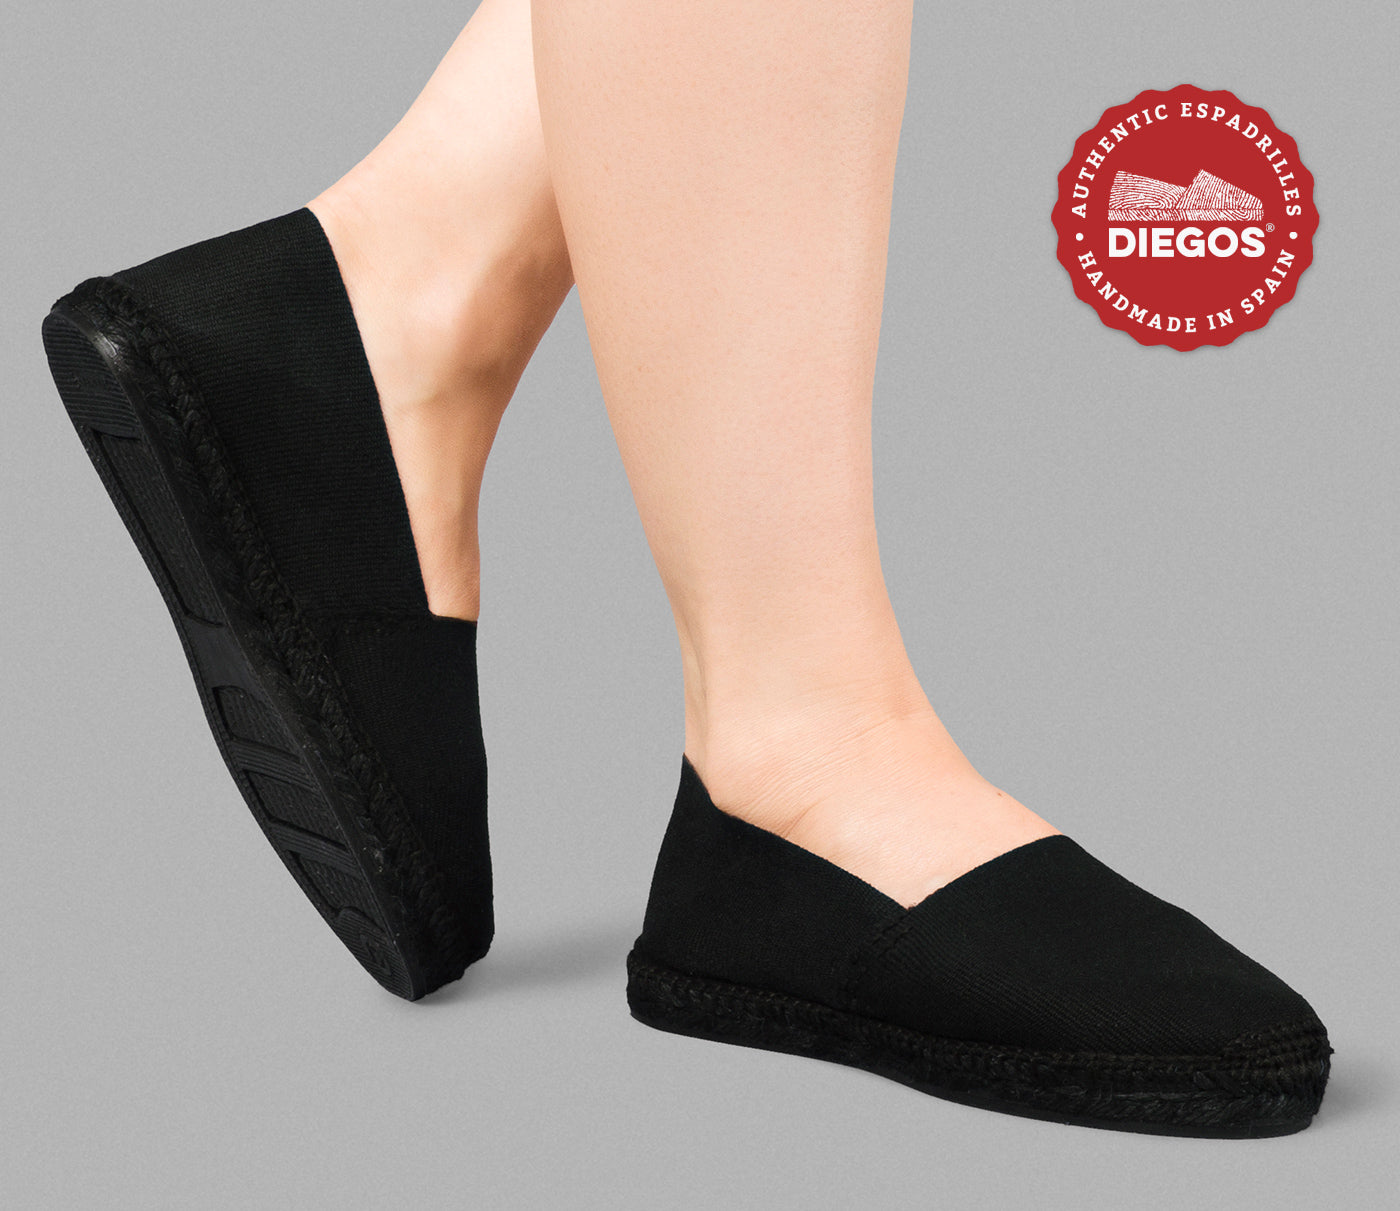 All black flat espadrilles for women | DIEGOS – diegos.com